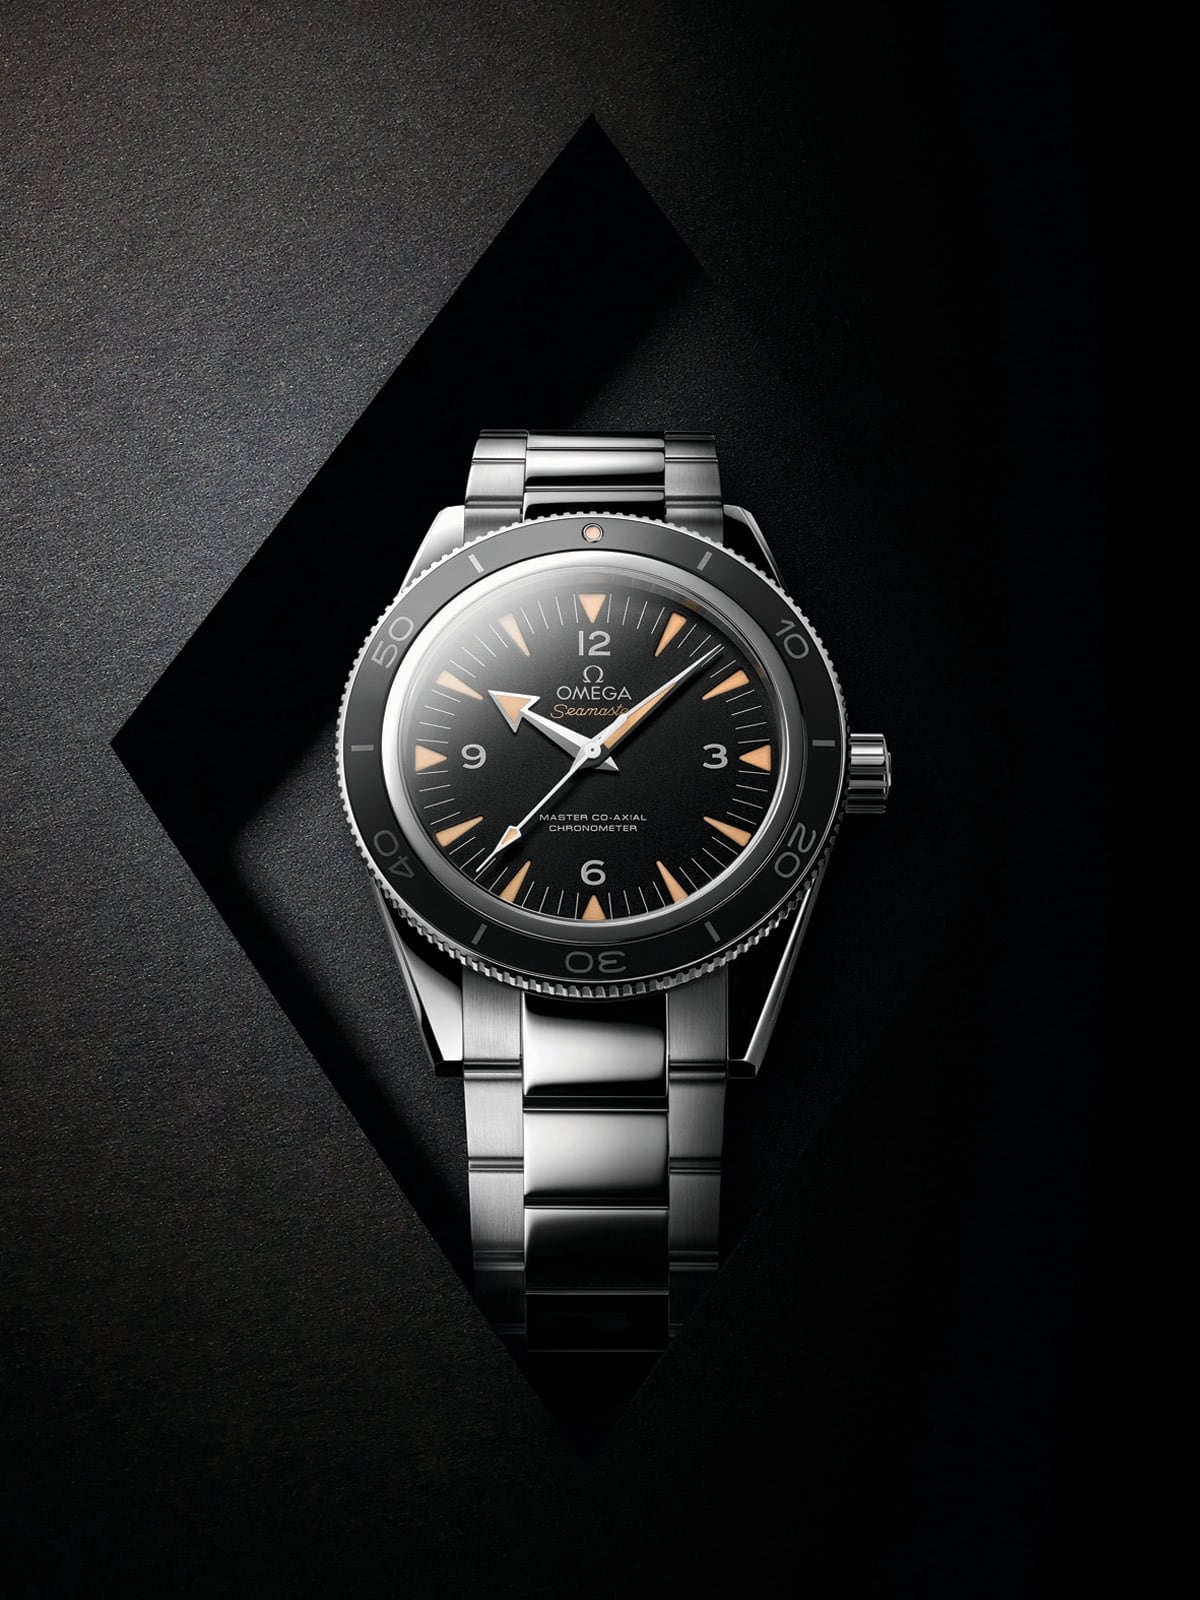 Cartier Watch Replica Review